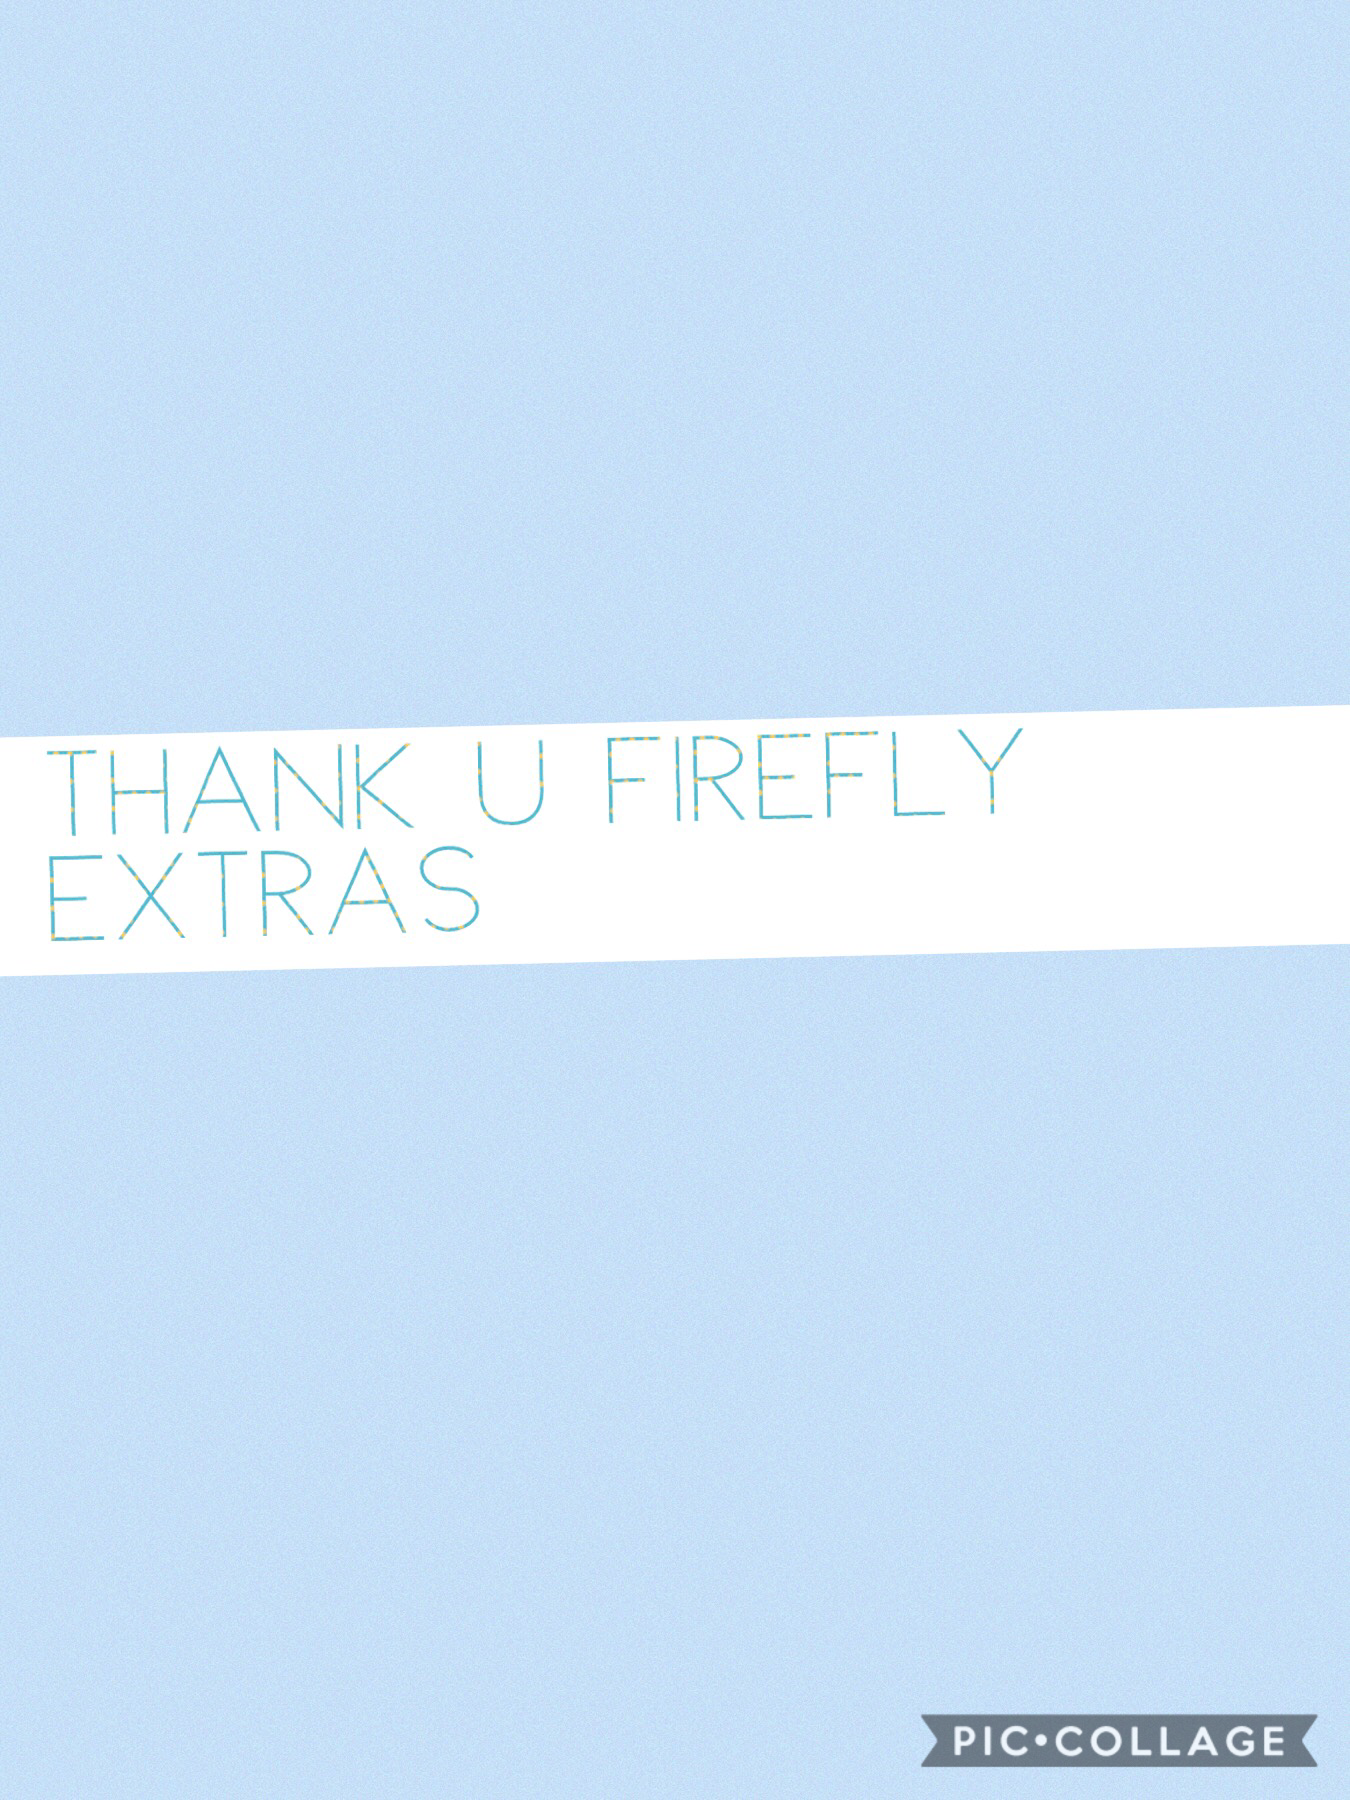 Go follow firefly extras